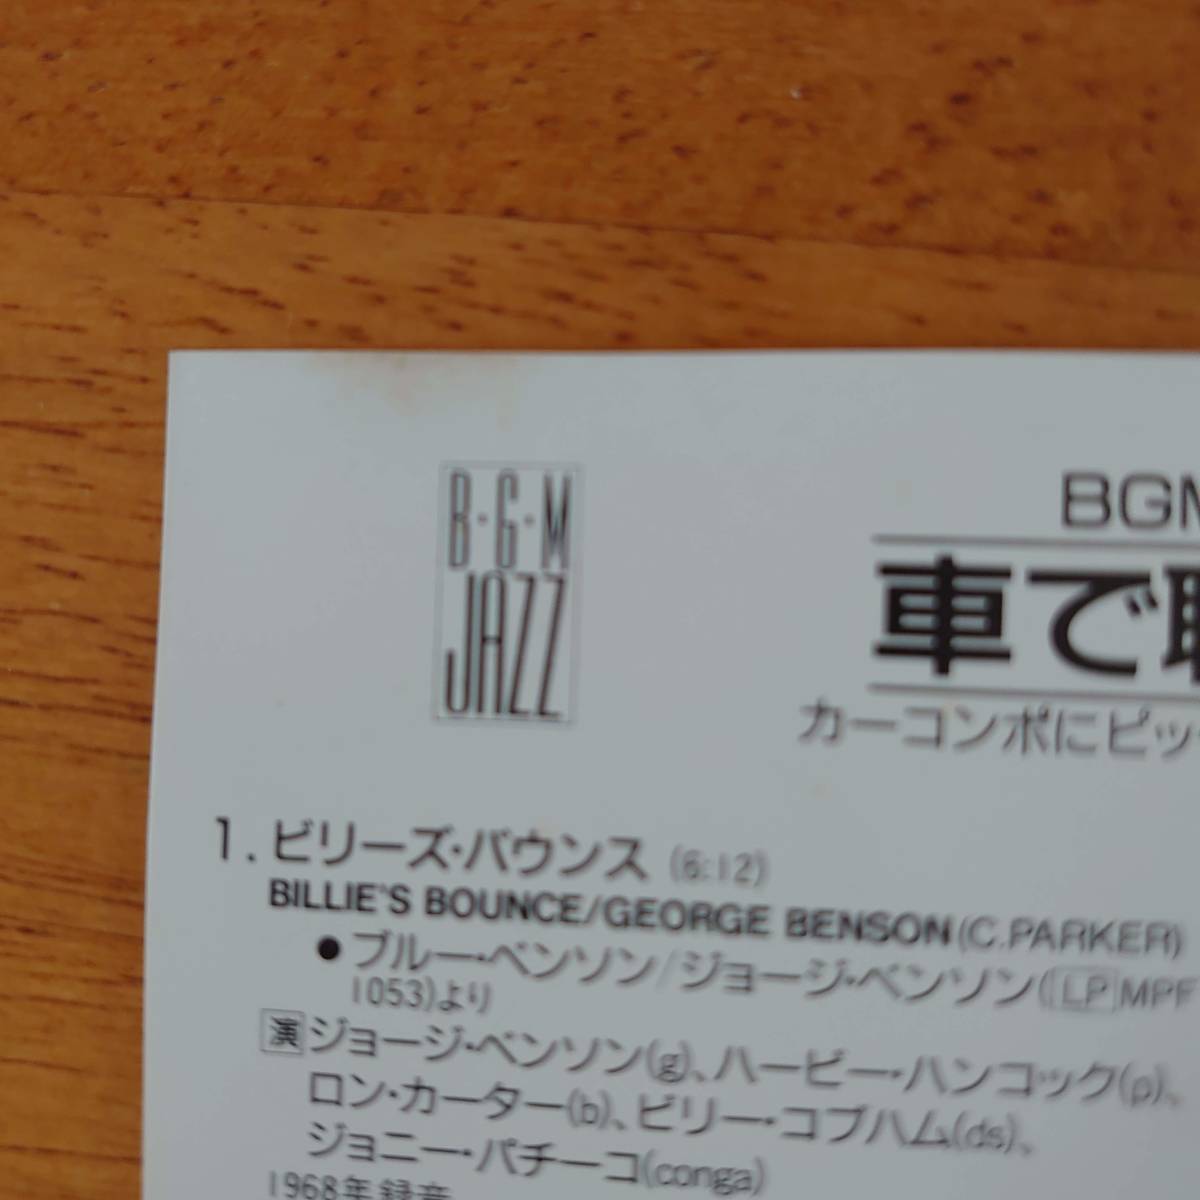 DRIVING JAZZ(BGM JAZZ SERIES) 車で聴くジャズ BGMジャズ・シリーズ3 【CD】_画像6